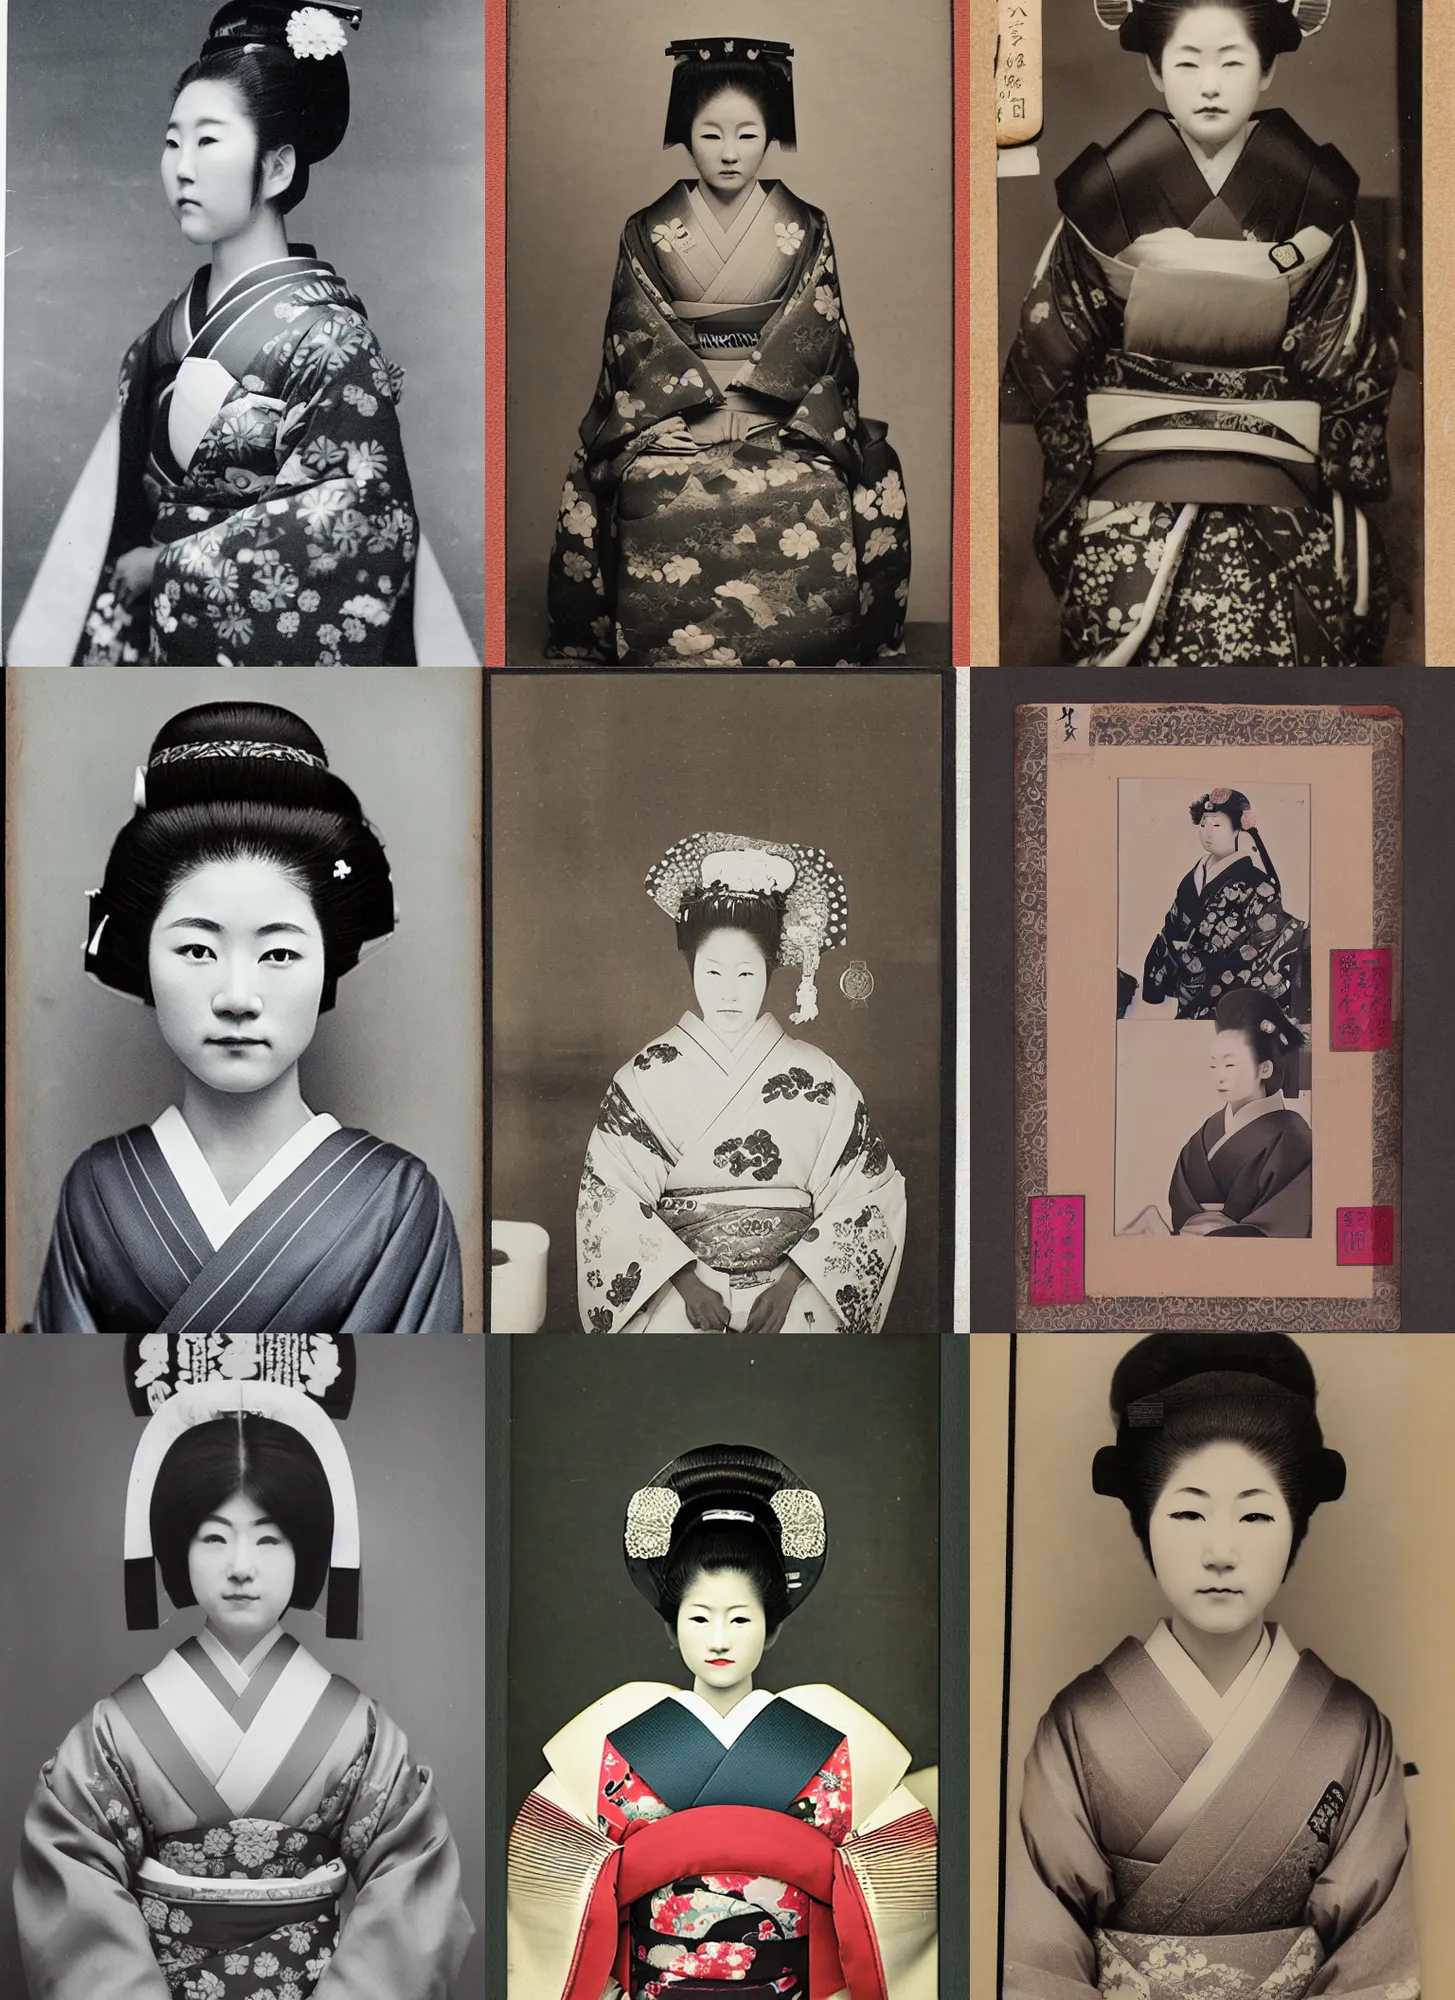 Prompt: Portrait Photograph of a Japanese Geisha Revolog SnoVlox